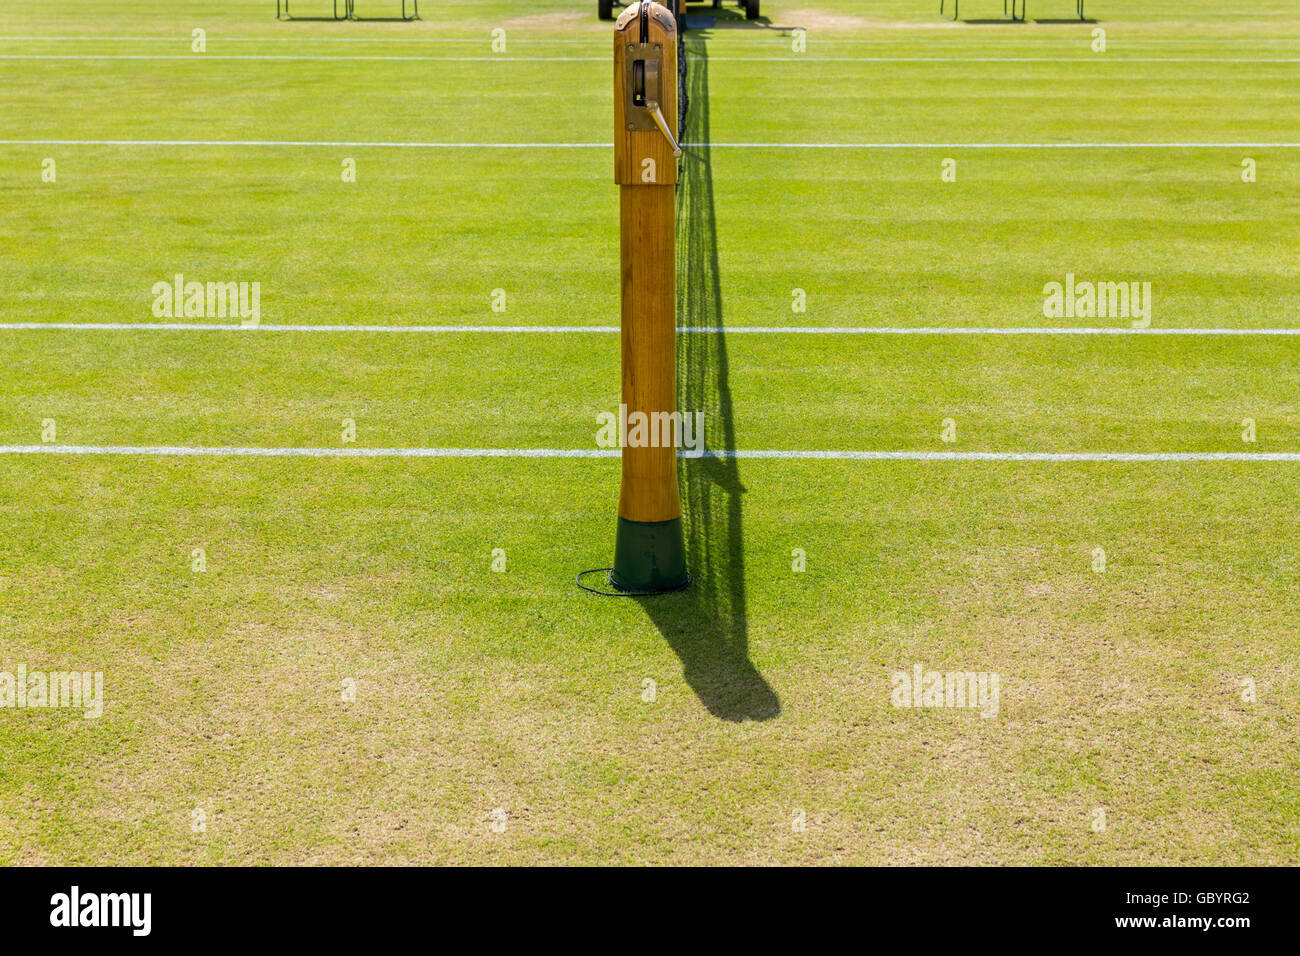 Grass tennis court and wooden net pole Stock Photo